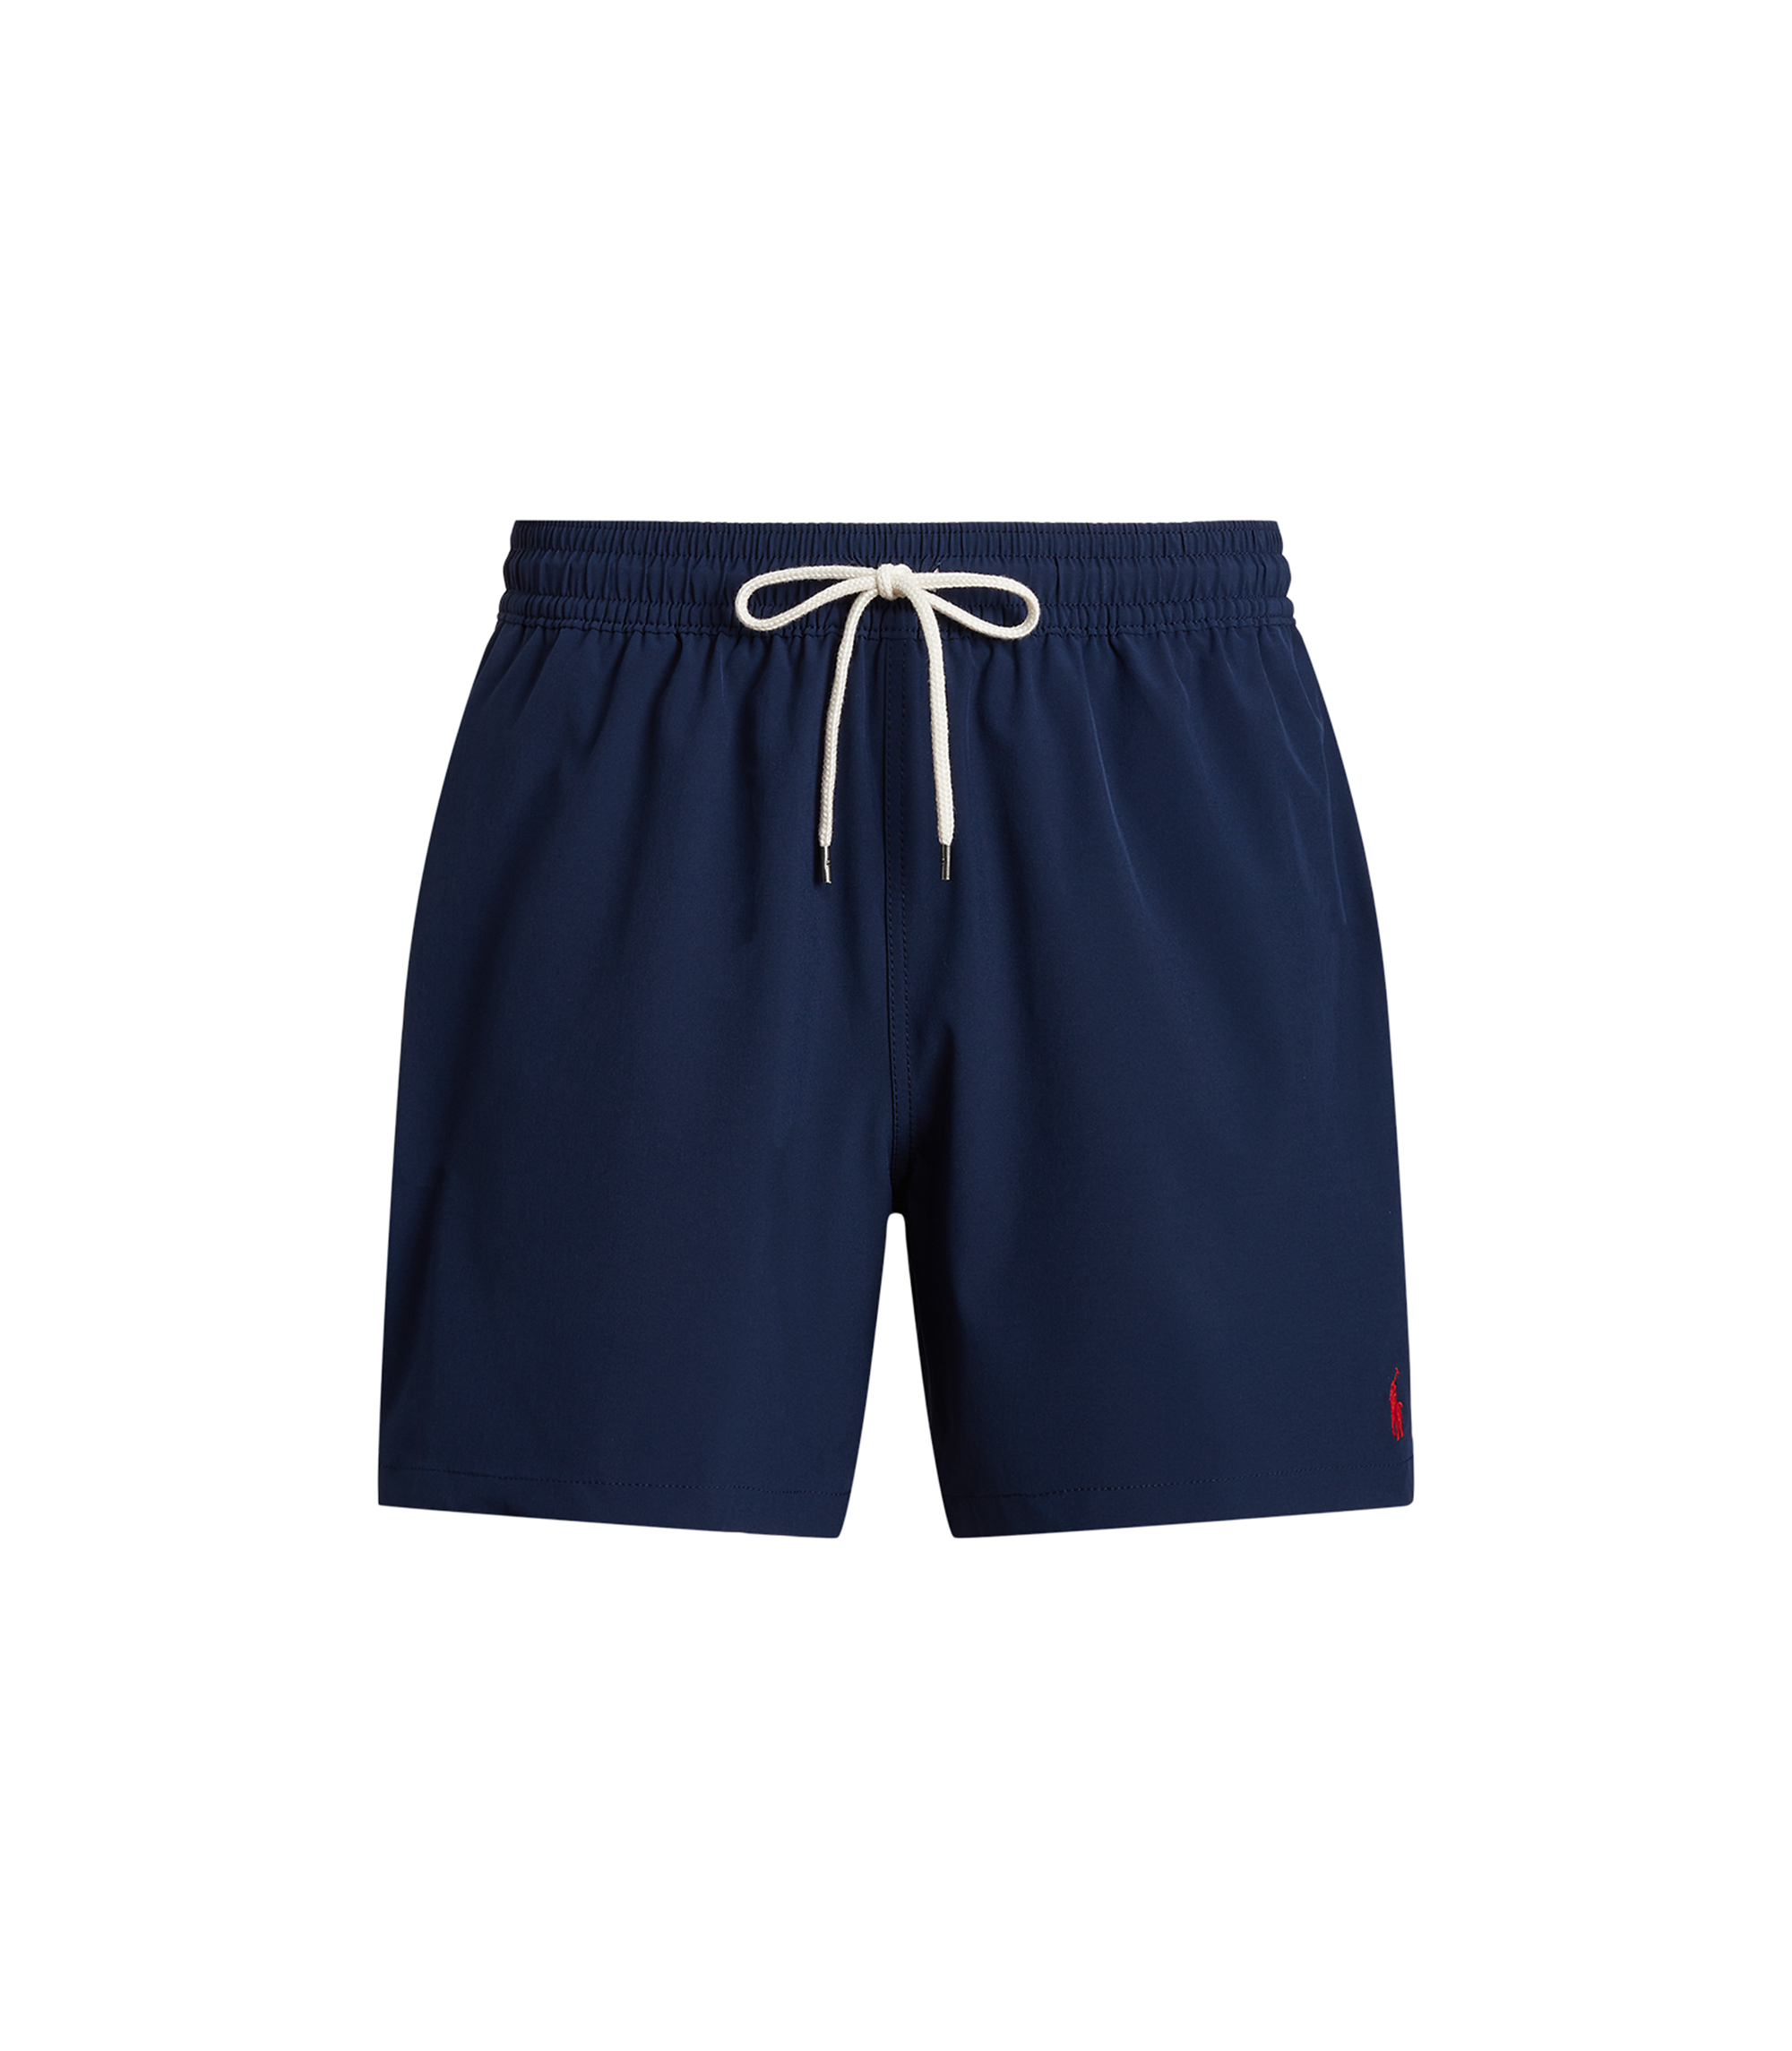 Traveller Swim Shorts - Newport Navy